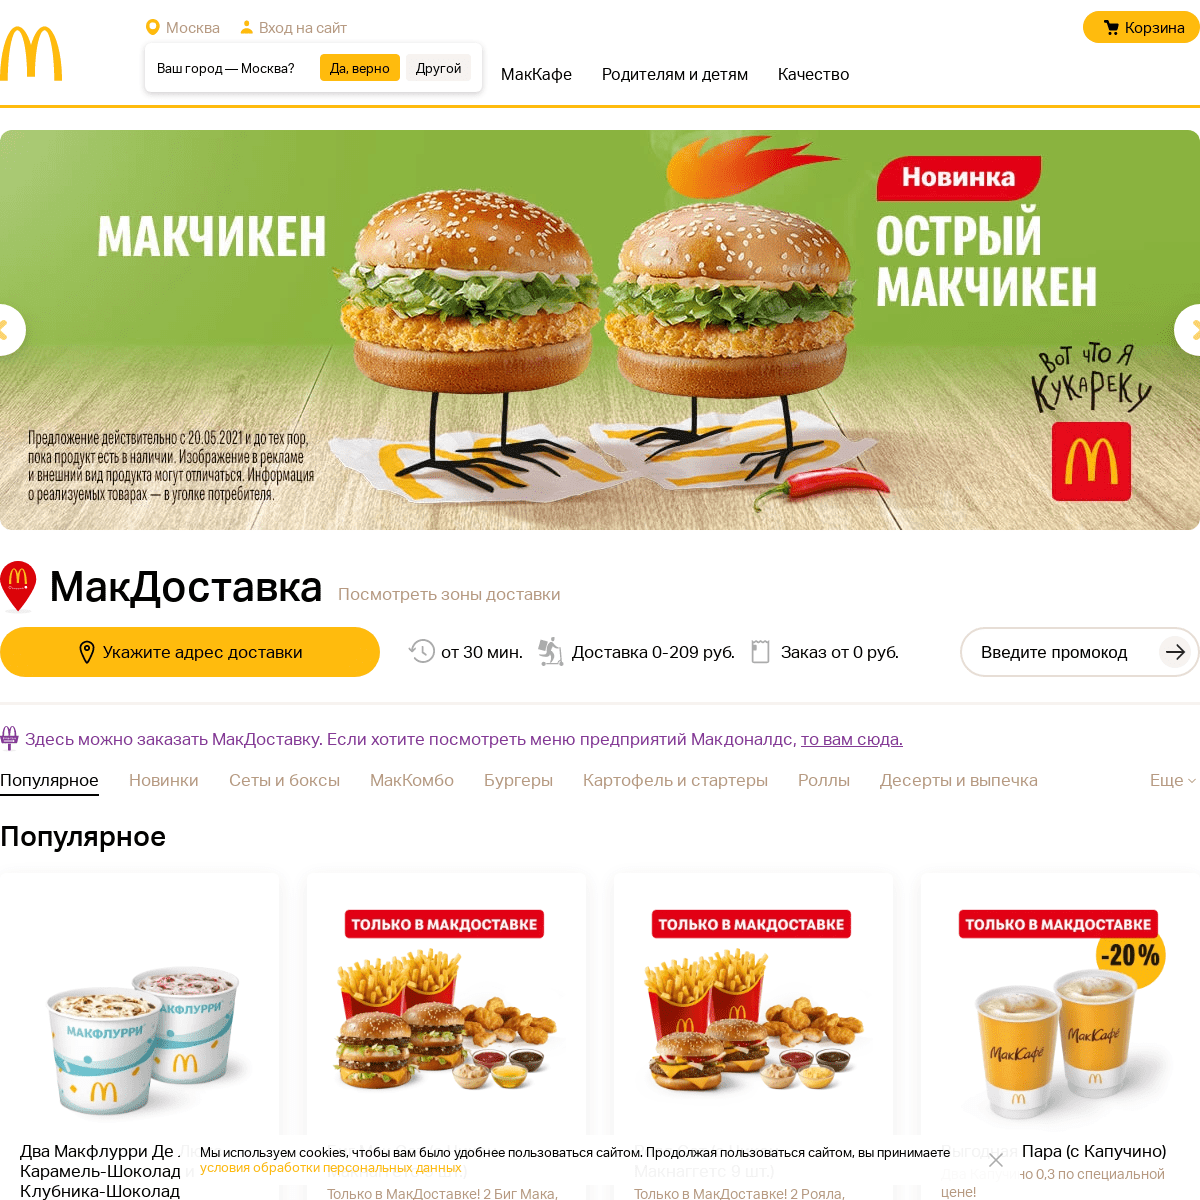 A complete backup of https://mcdonalds.ru